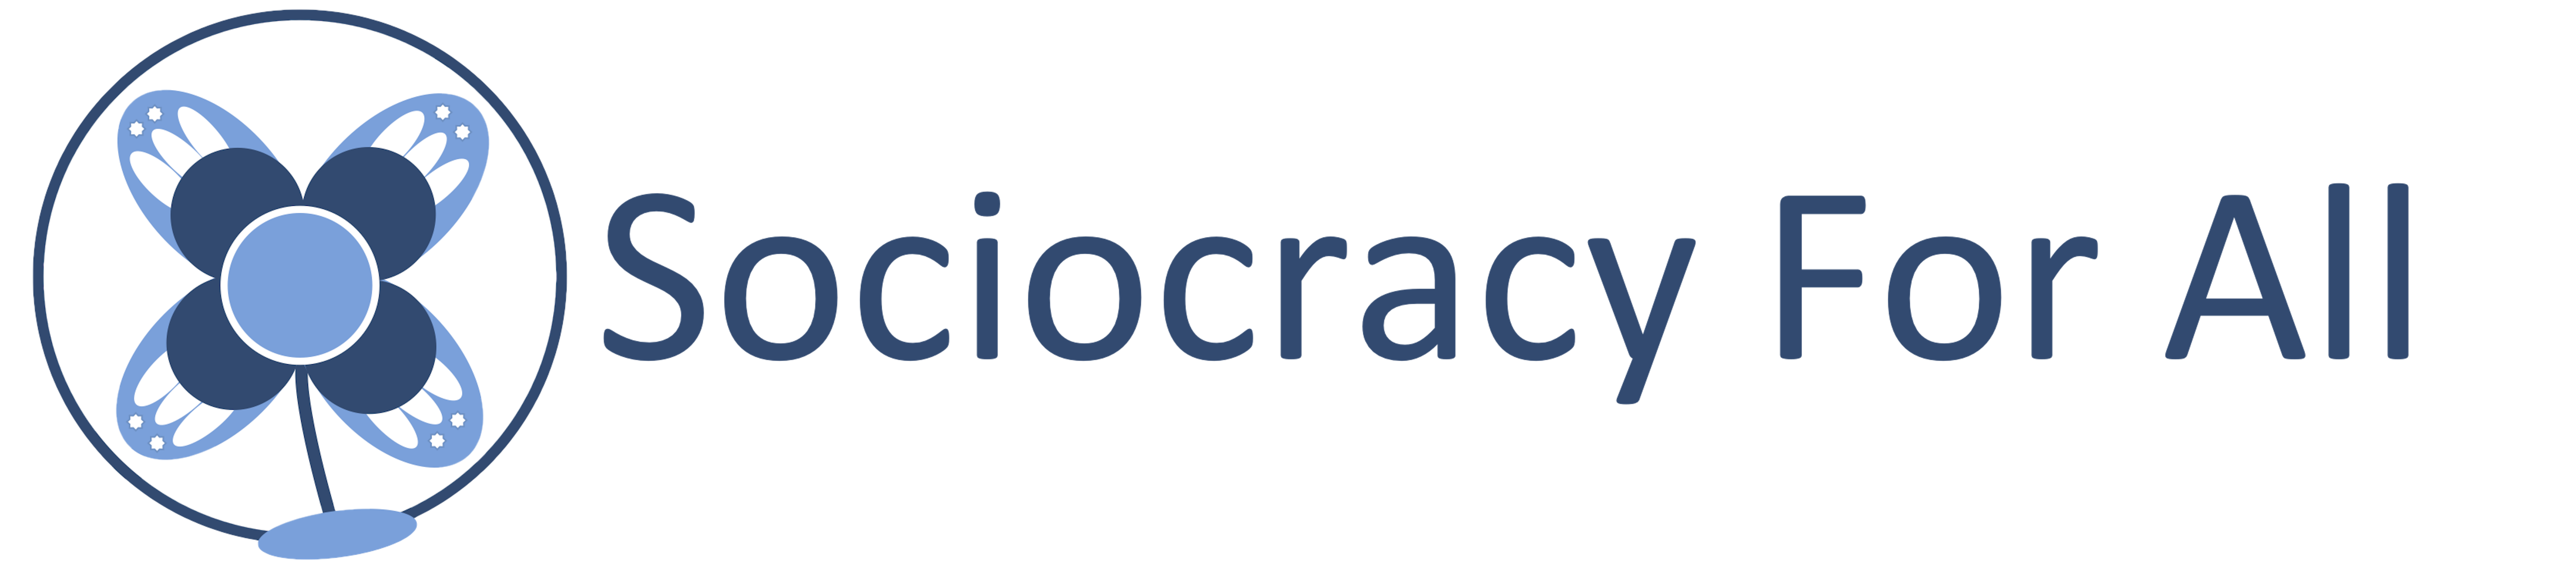 Sociocracy For All logo